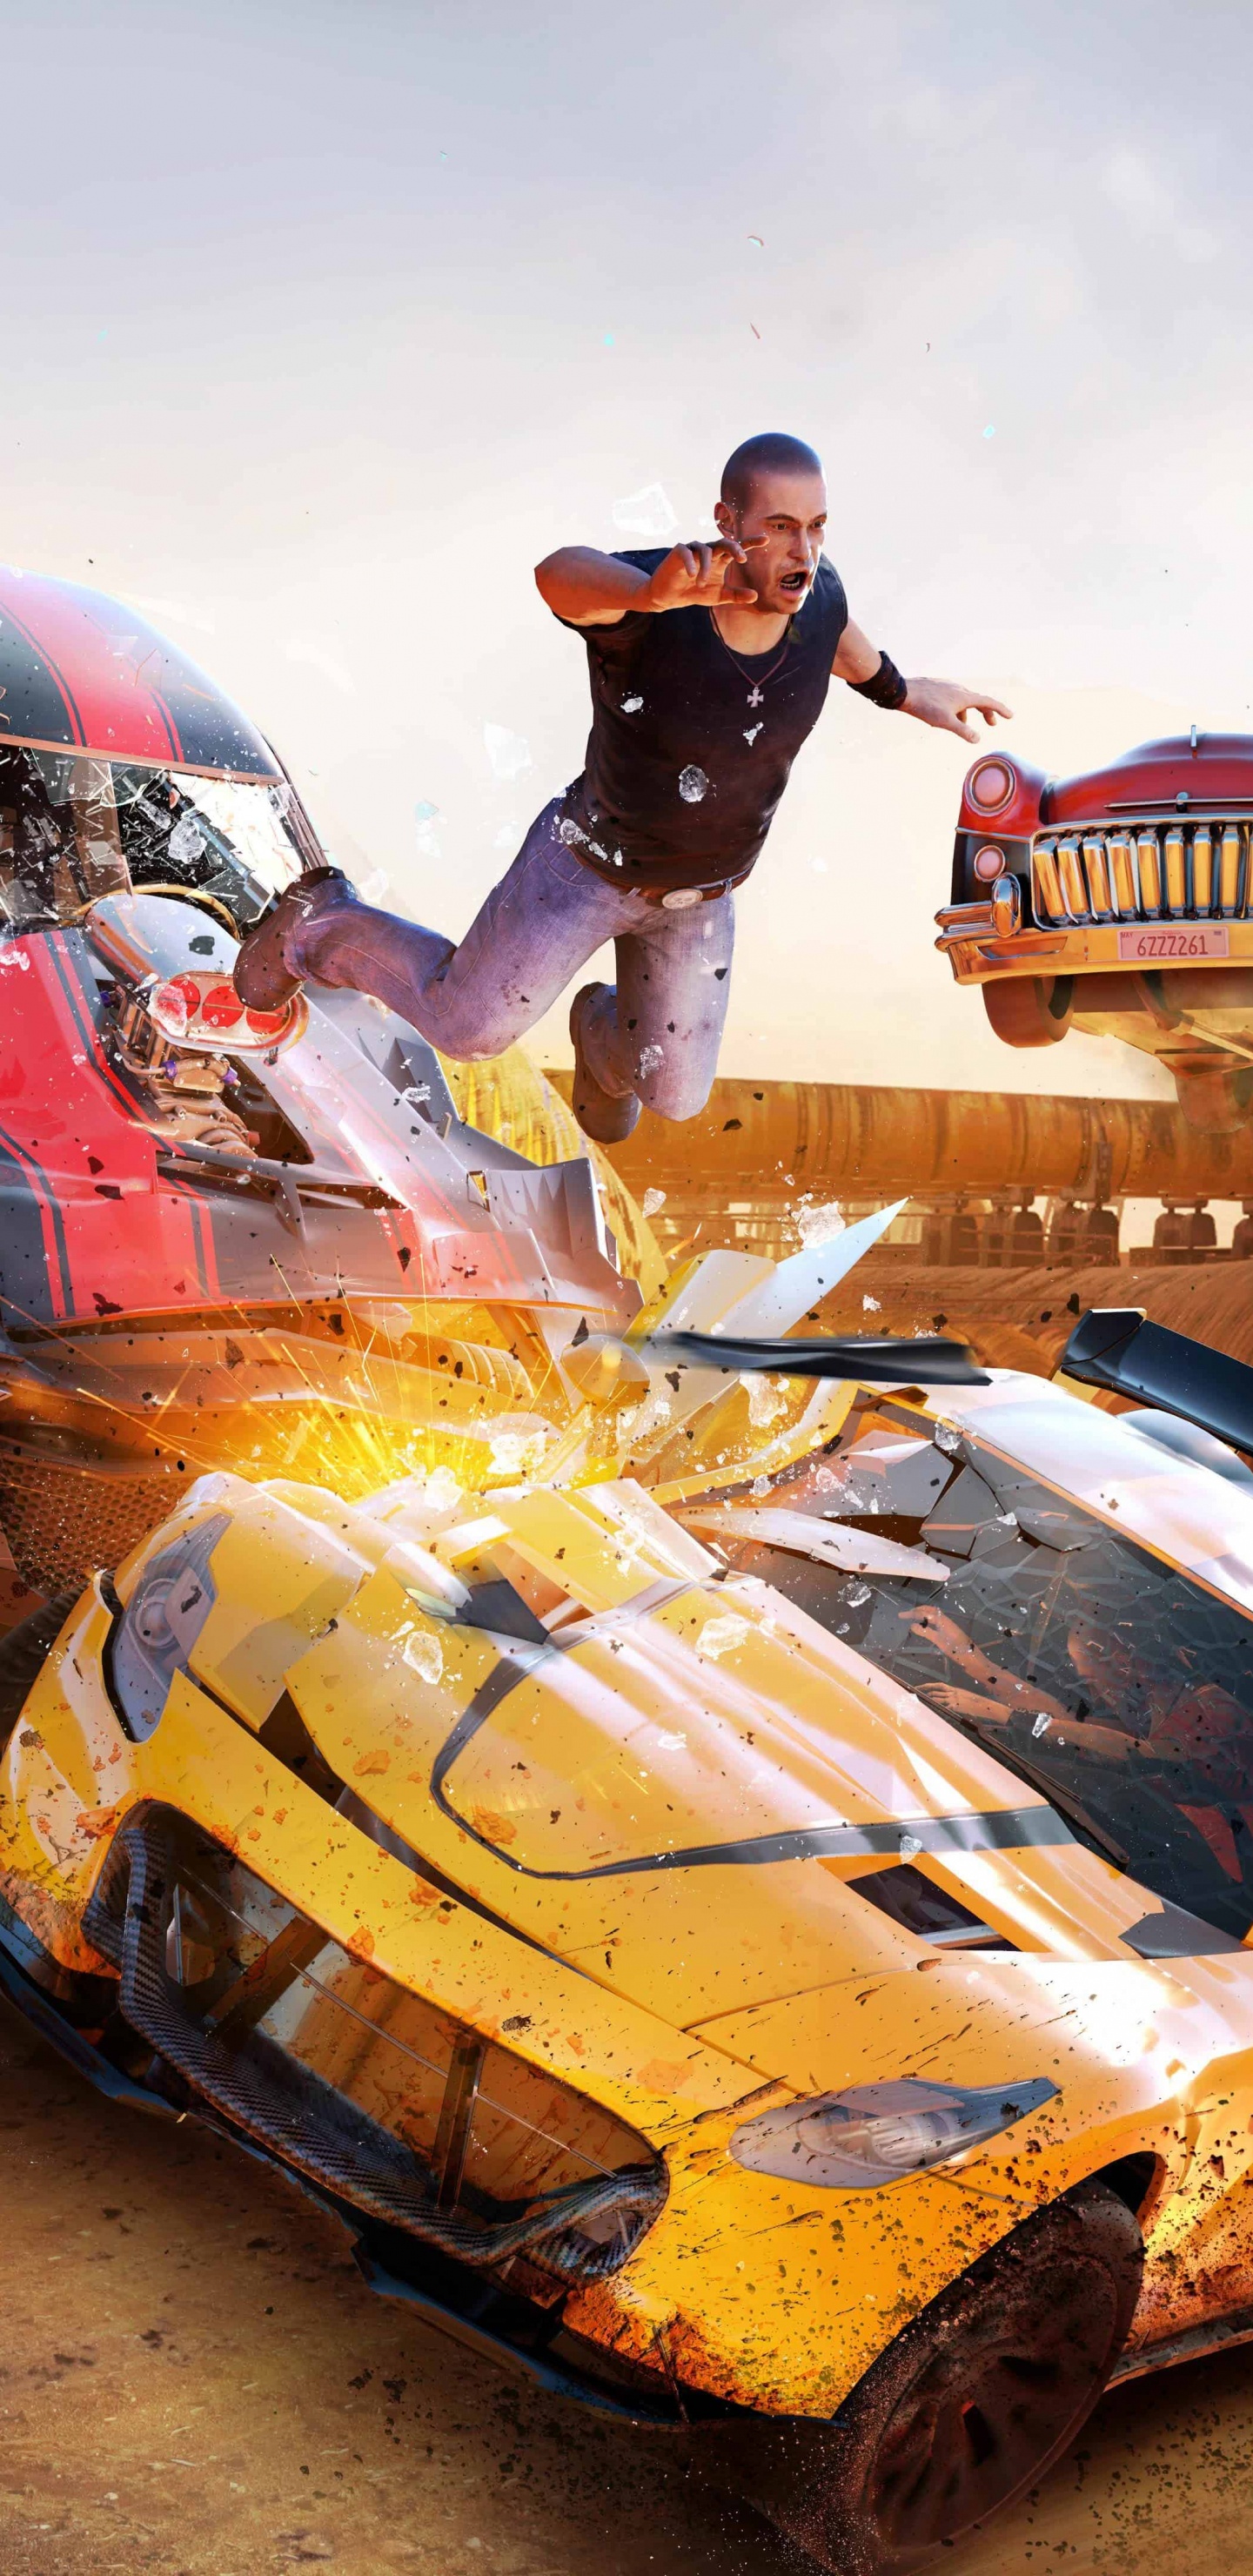 Racing Video Game, Stunt Performer, Motorsport, pc Game, Racing. Wallpaper in 1440x2960 Resolution